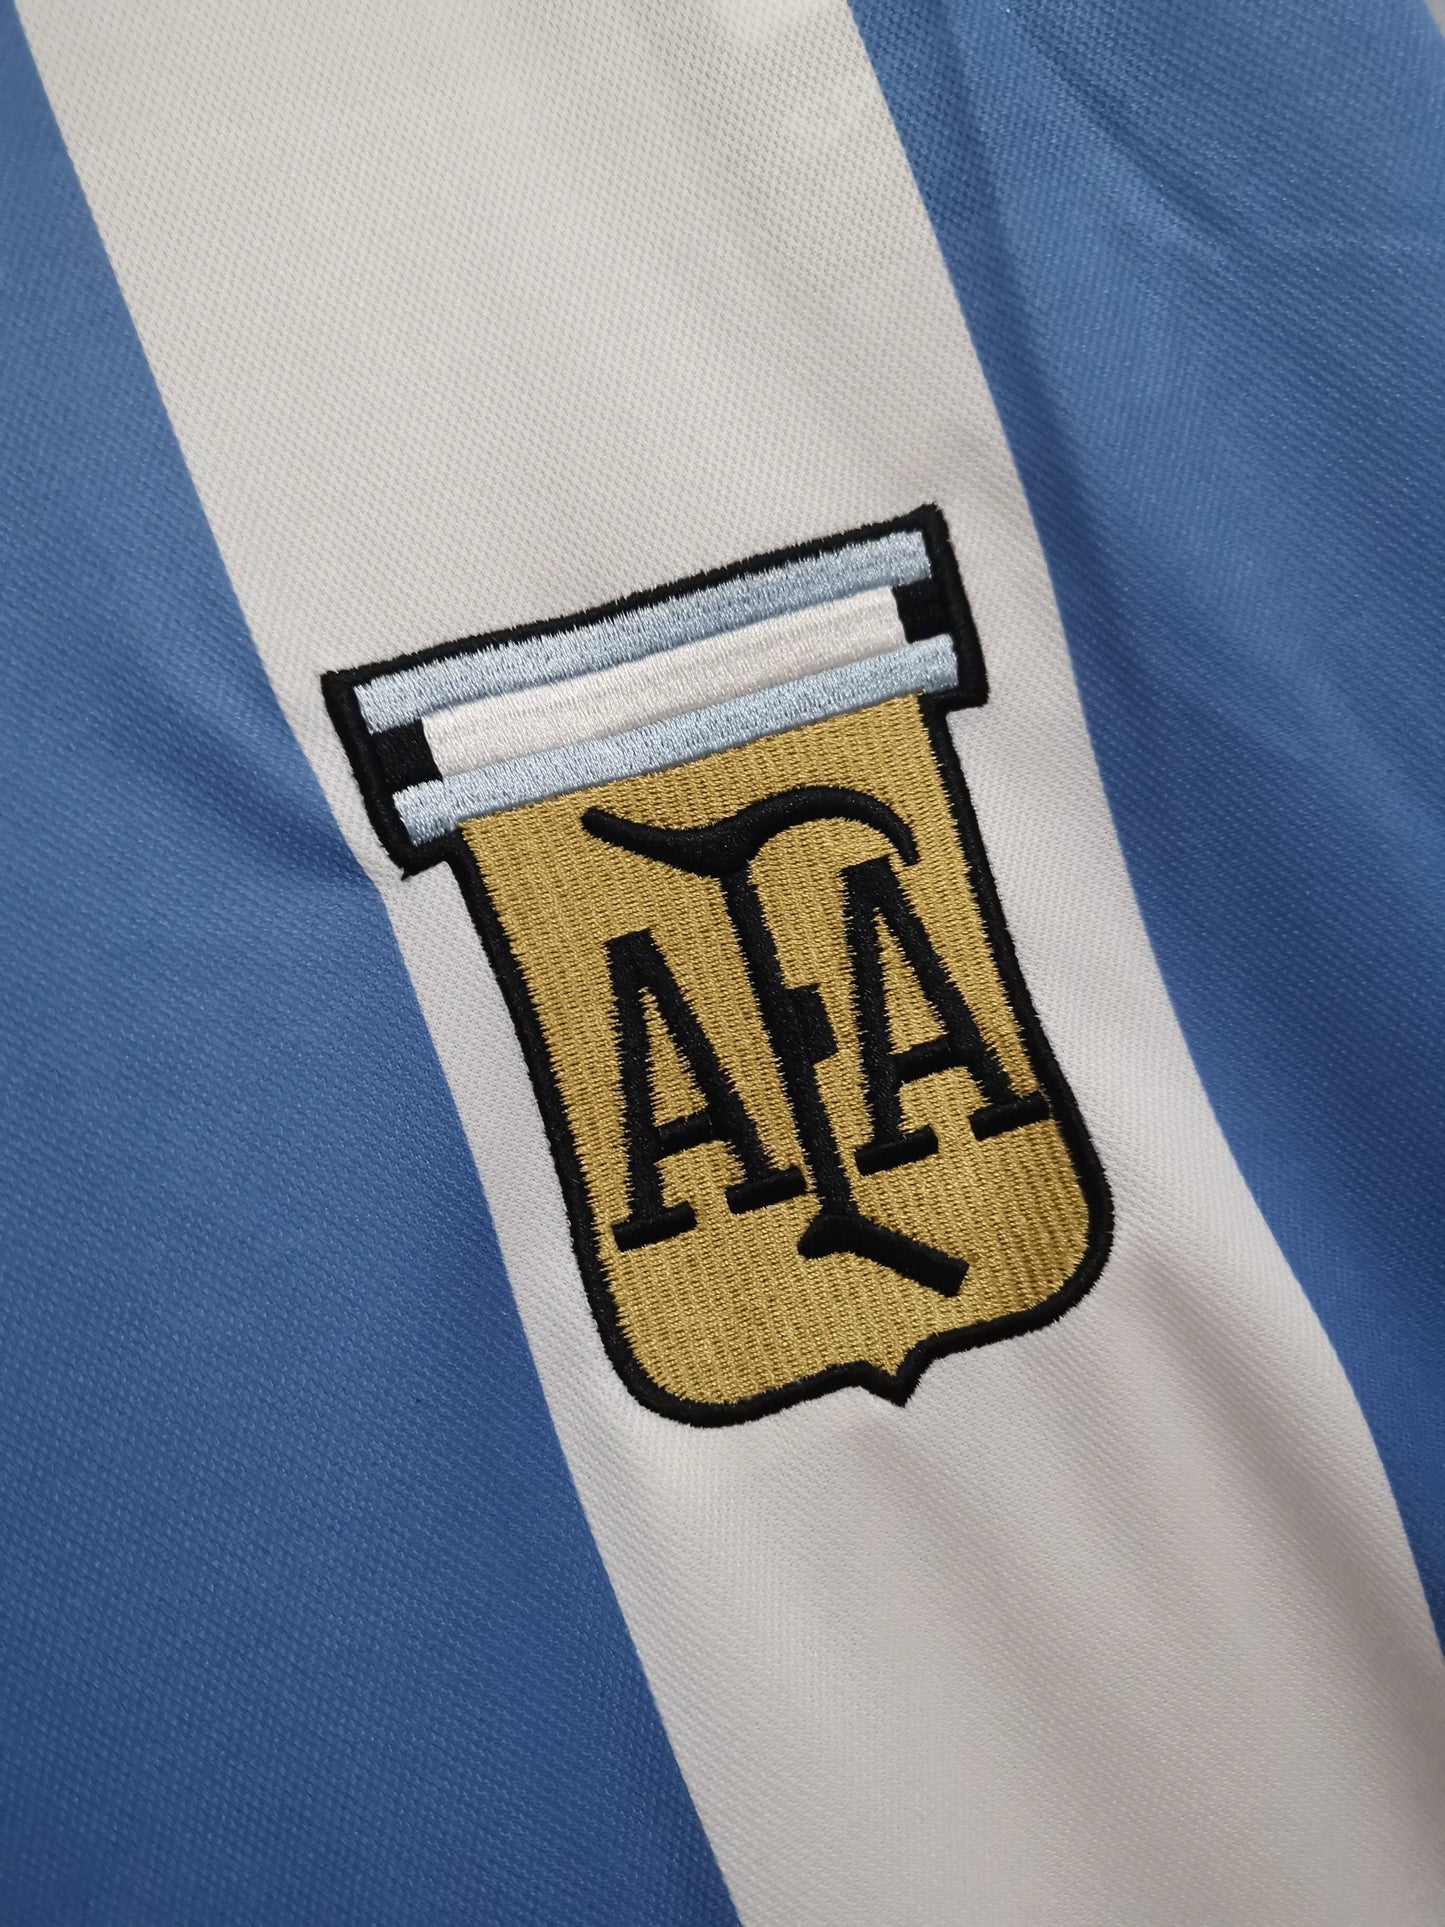 Argentina 1985 Home Shirt